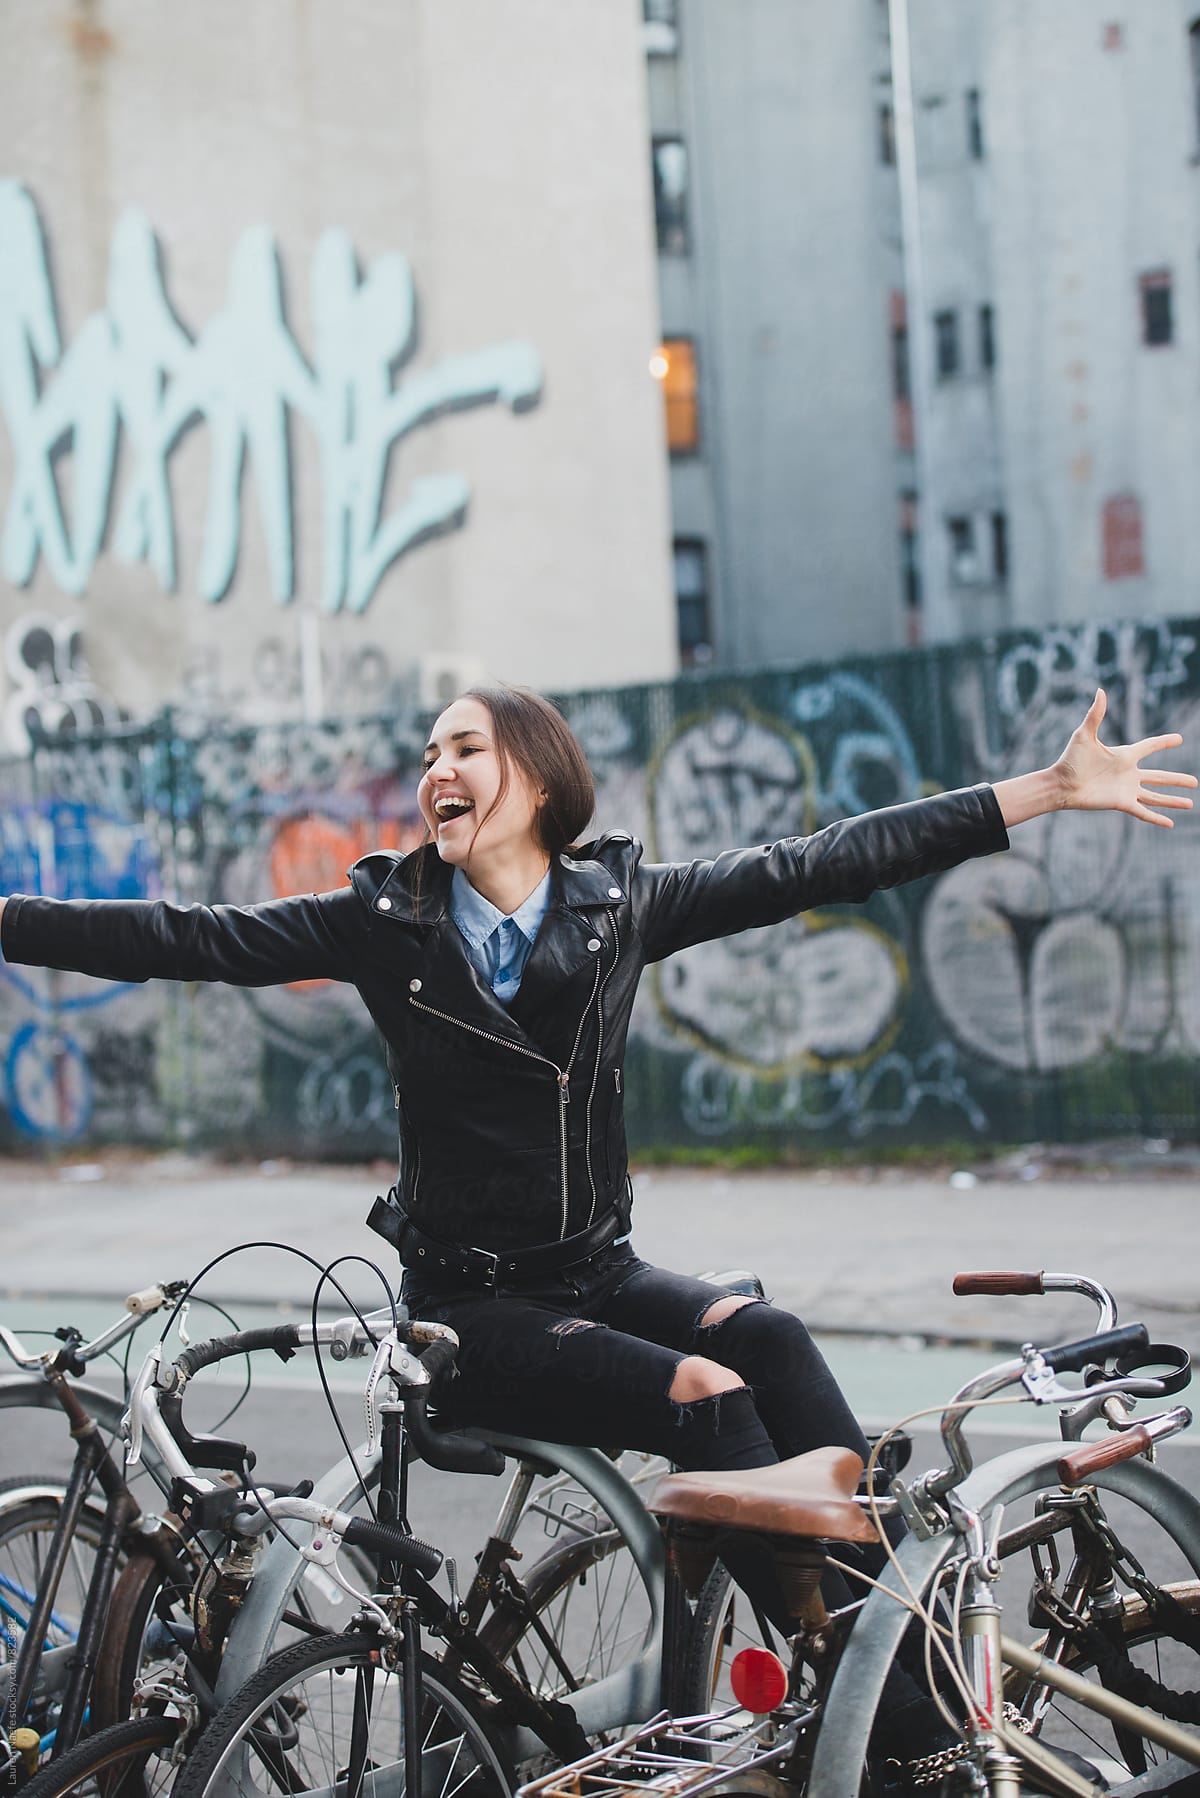 Free-spirited young woman sitting on bike rack